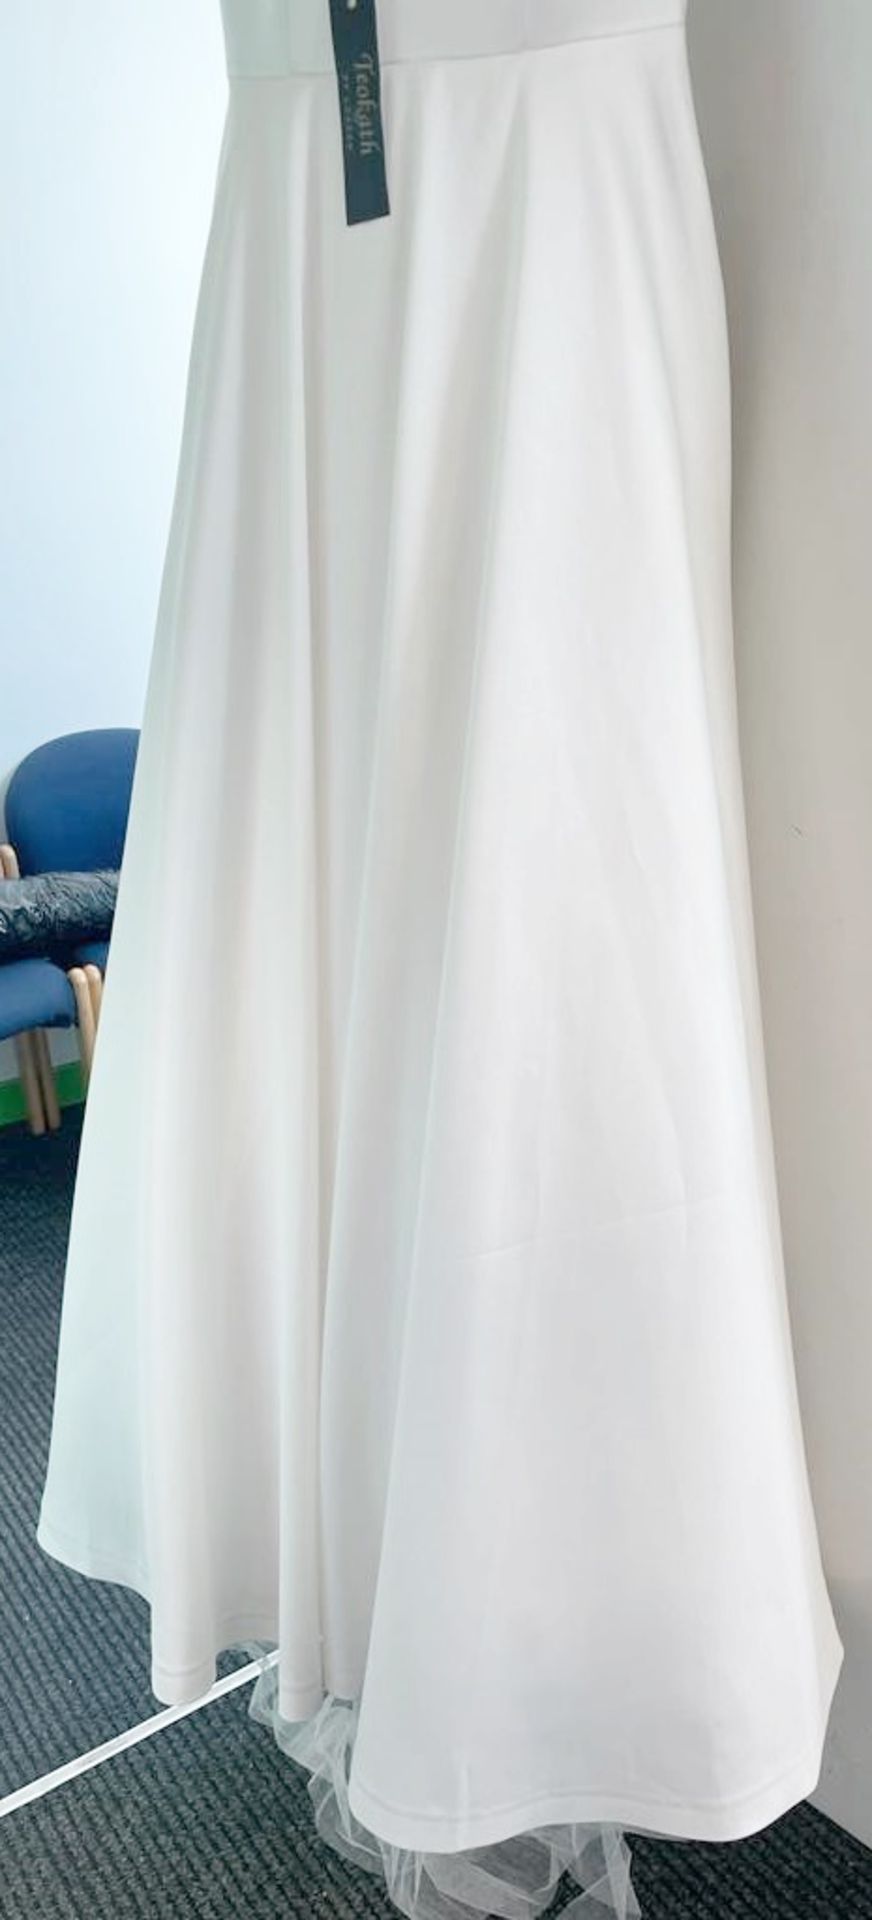 1 x ALLURE BRIDALS Sleeveless Designer Wedding Dress Bridal Gown - Style: 9813 - Size: UK 10 - - Image 8 of 13